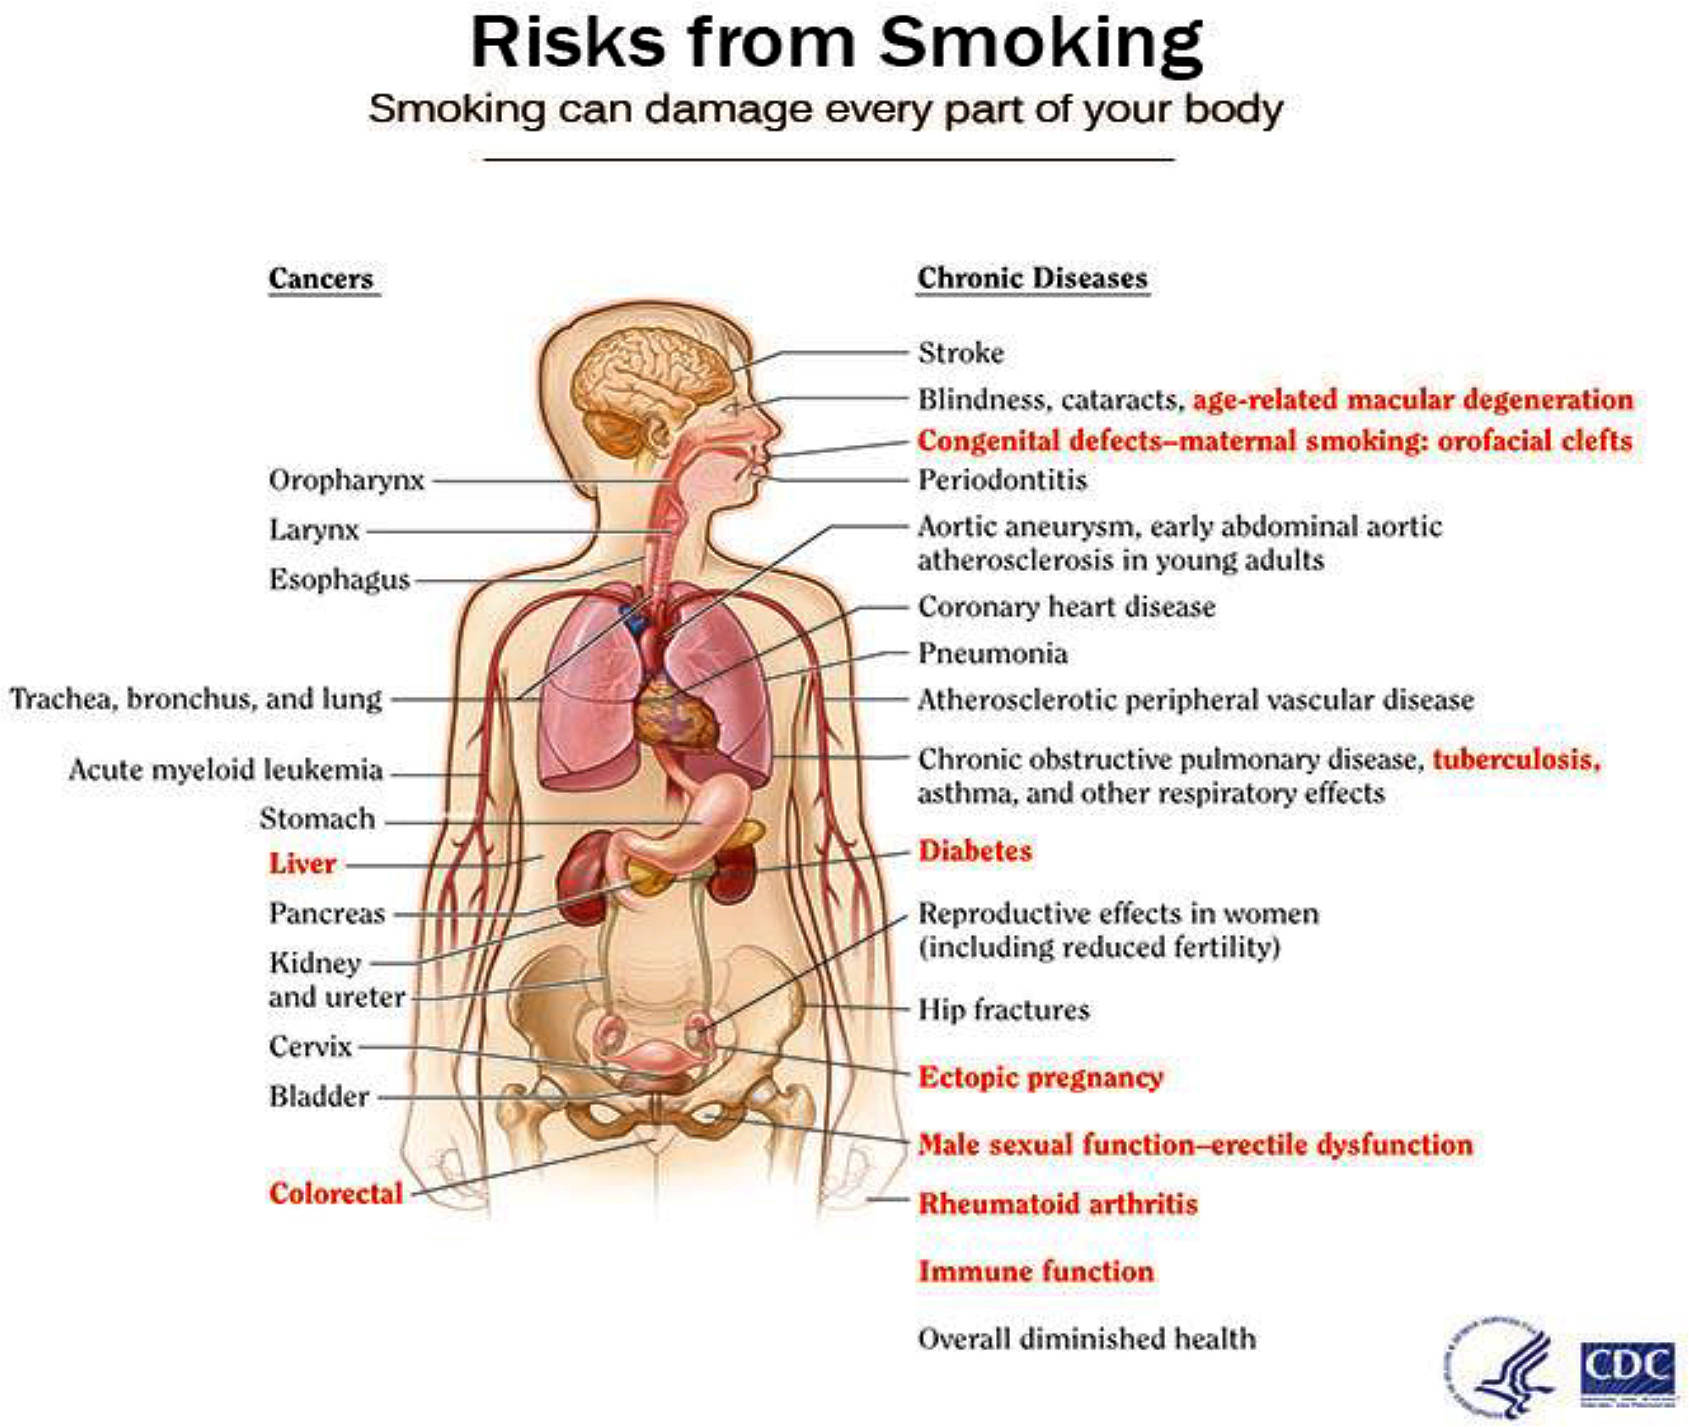 You and Your Health: Smoking